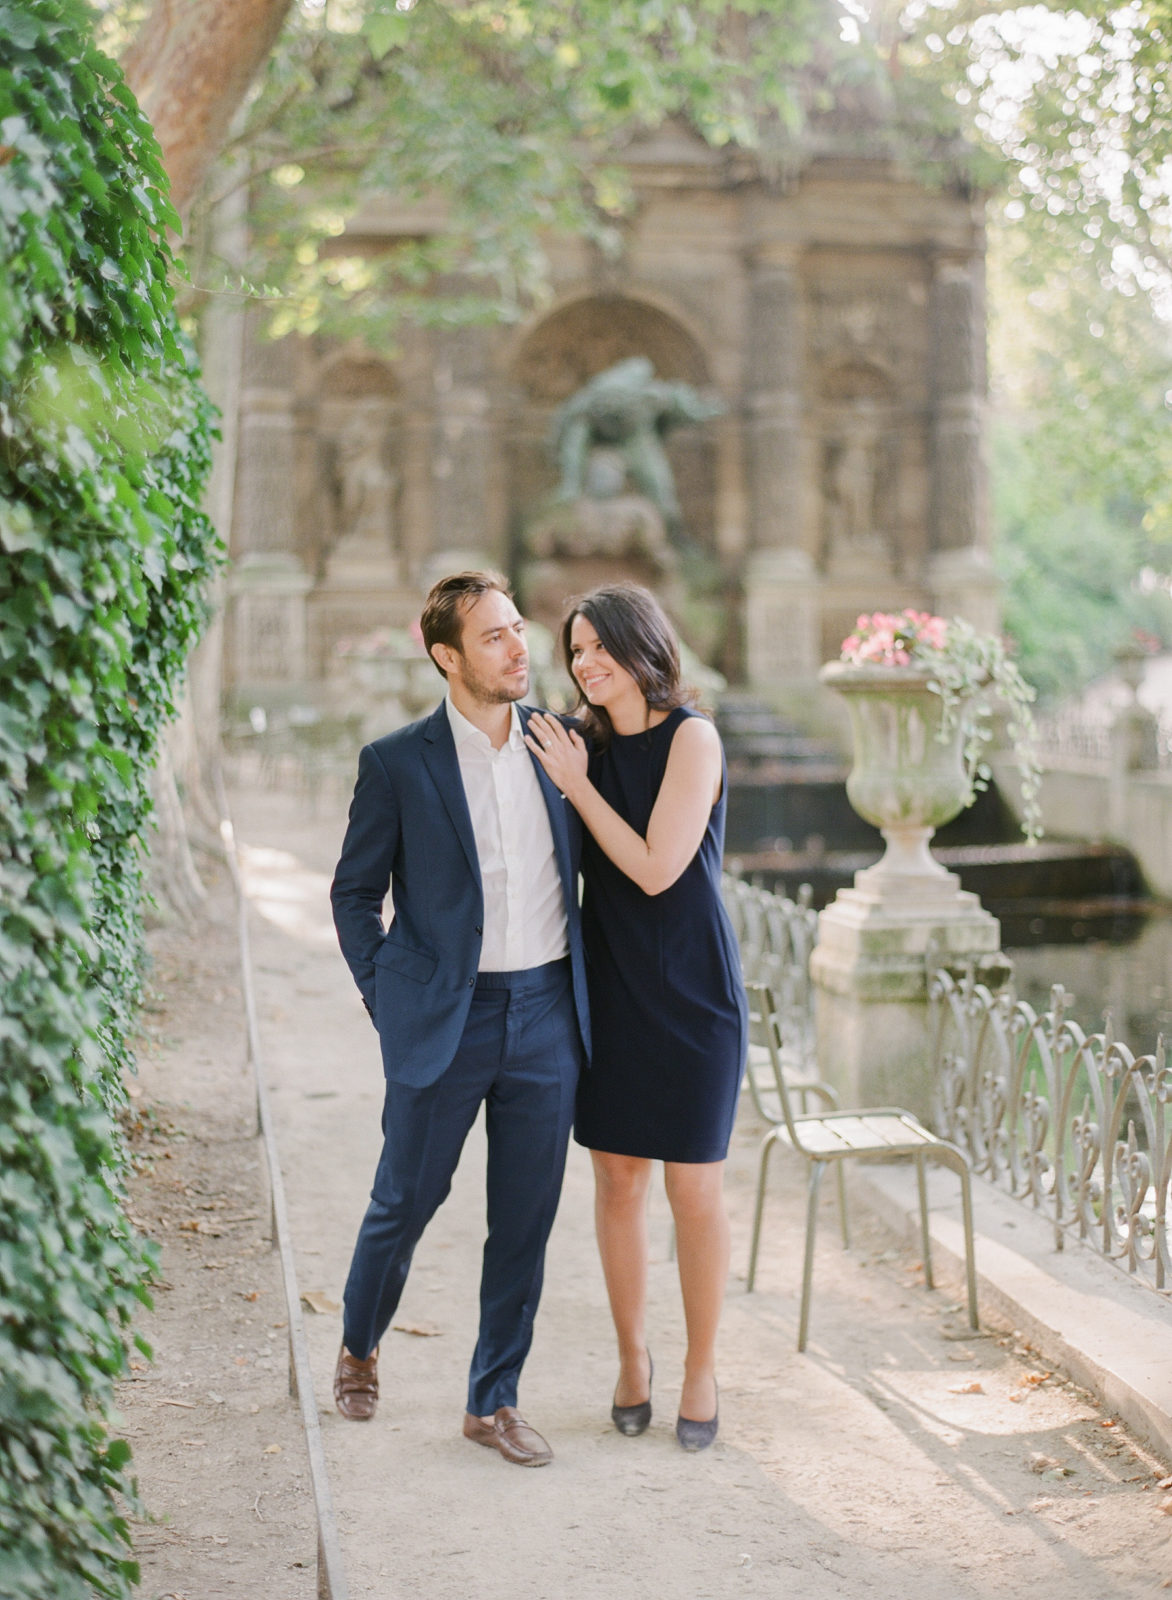 Paris Engagement Photos | Paris Wedding Photography | Paris Film Photographer | France Wedding Photography | Molly Carr Photography | Paris Engagement Photo Locations | Luxembourg Gardens Medici Fountain